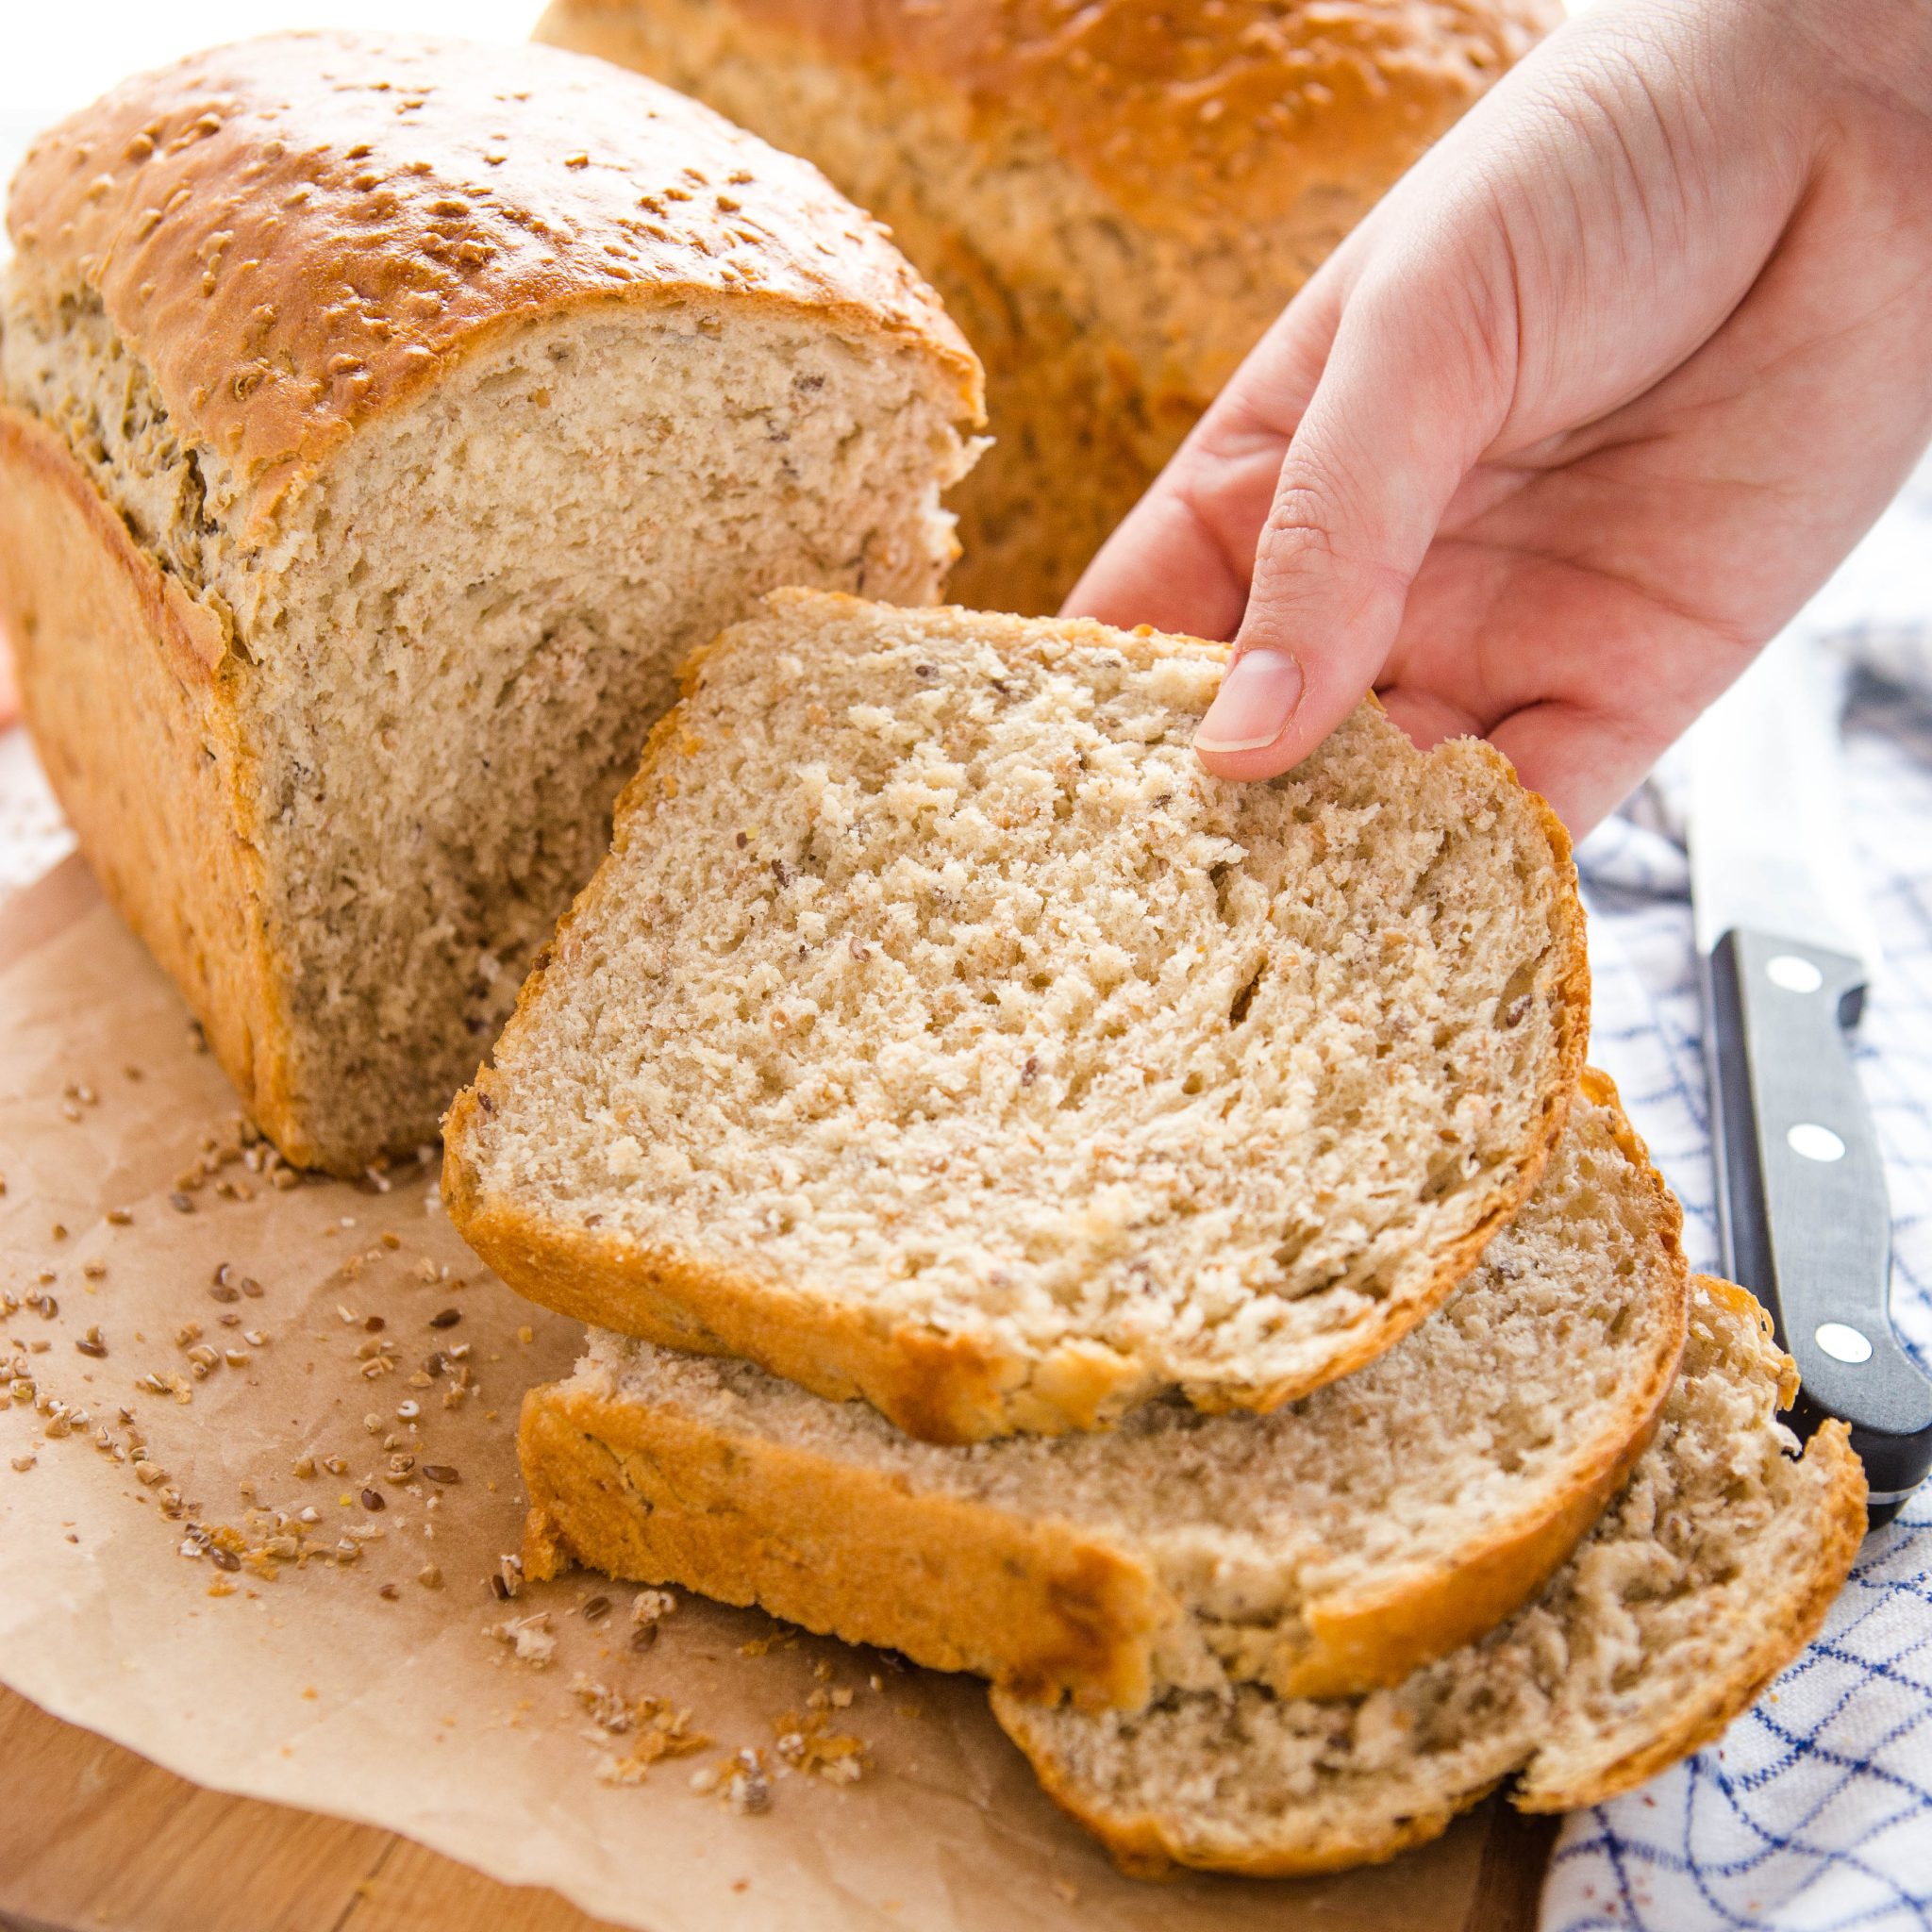 https://thebusybaker.ca/wp-content/uploads/2015/02/easy-whole-grain-sandwich-bread-fb-ig-6-scaled.jpg